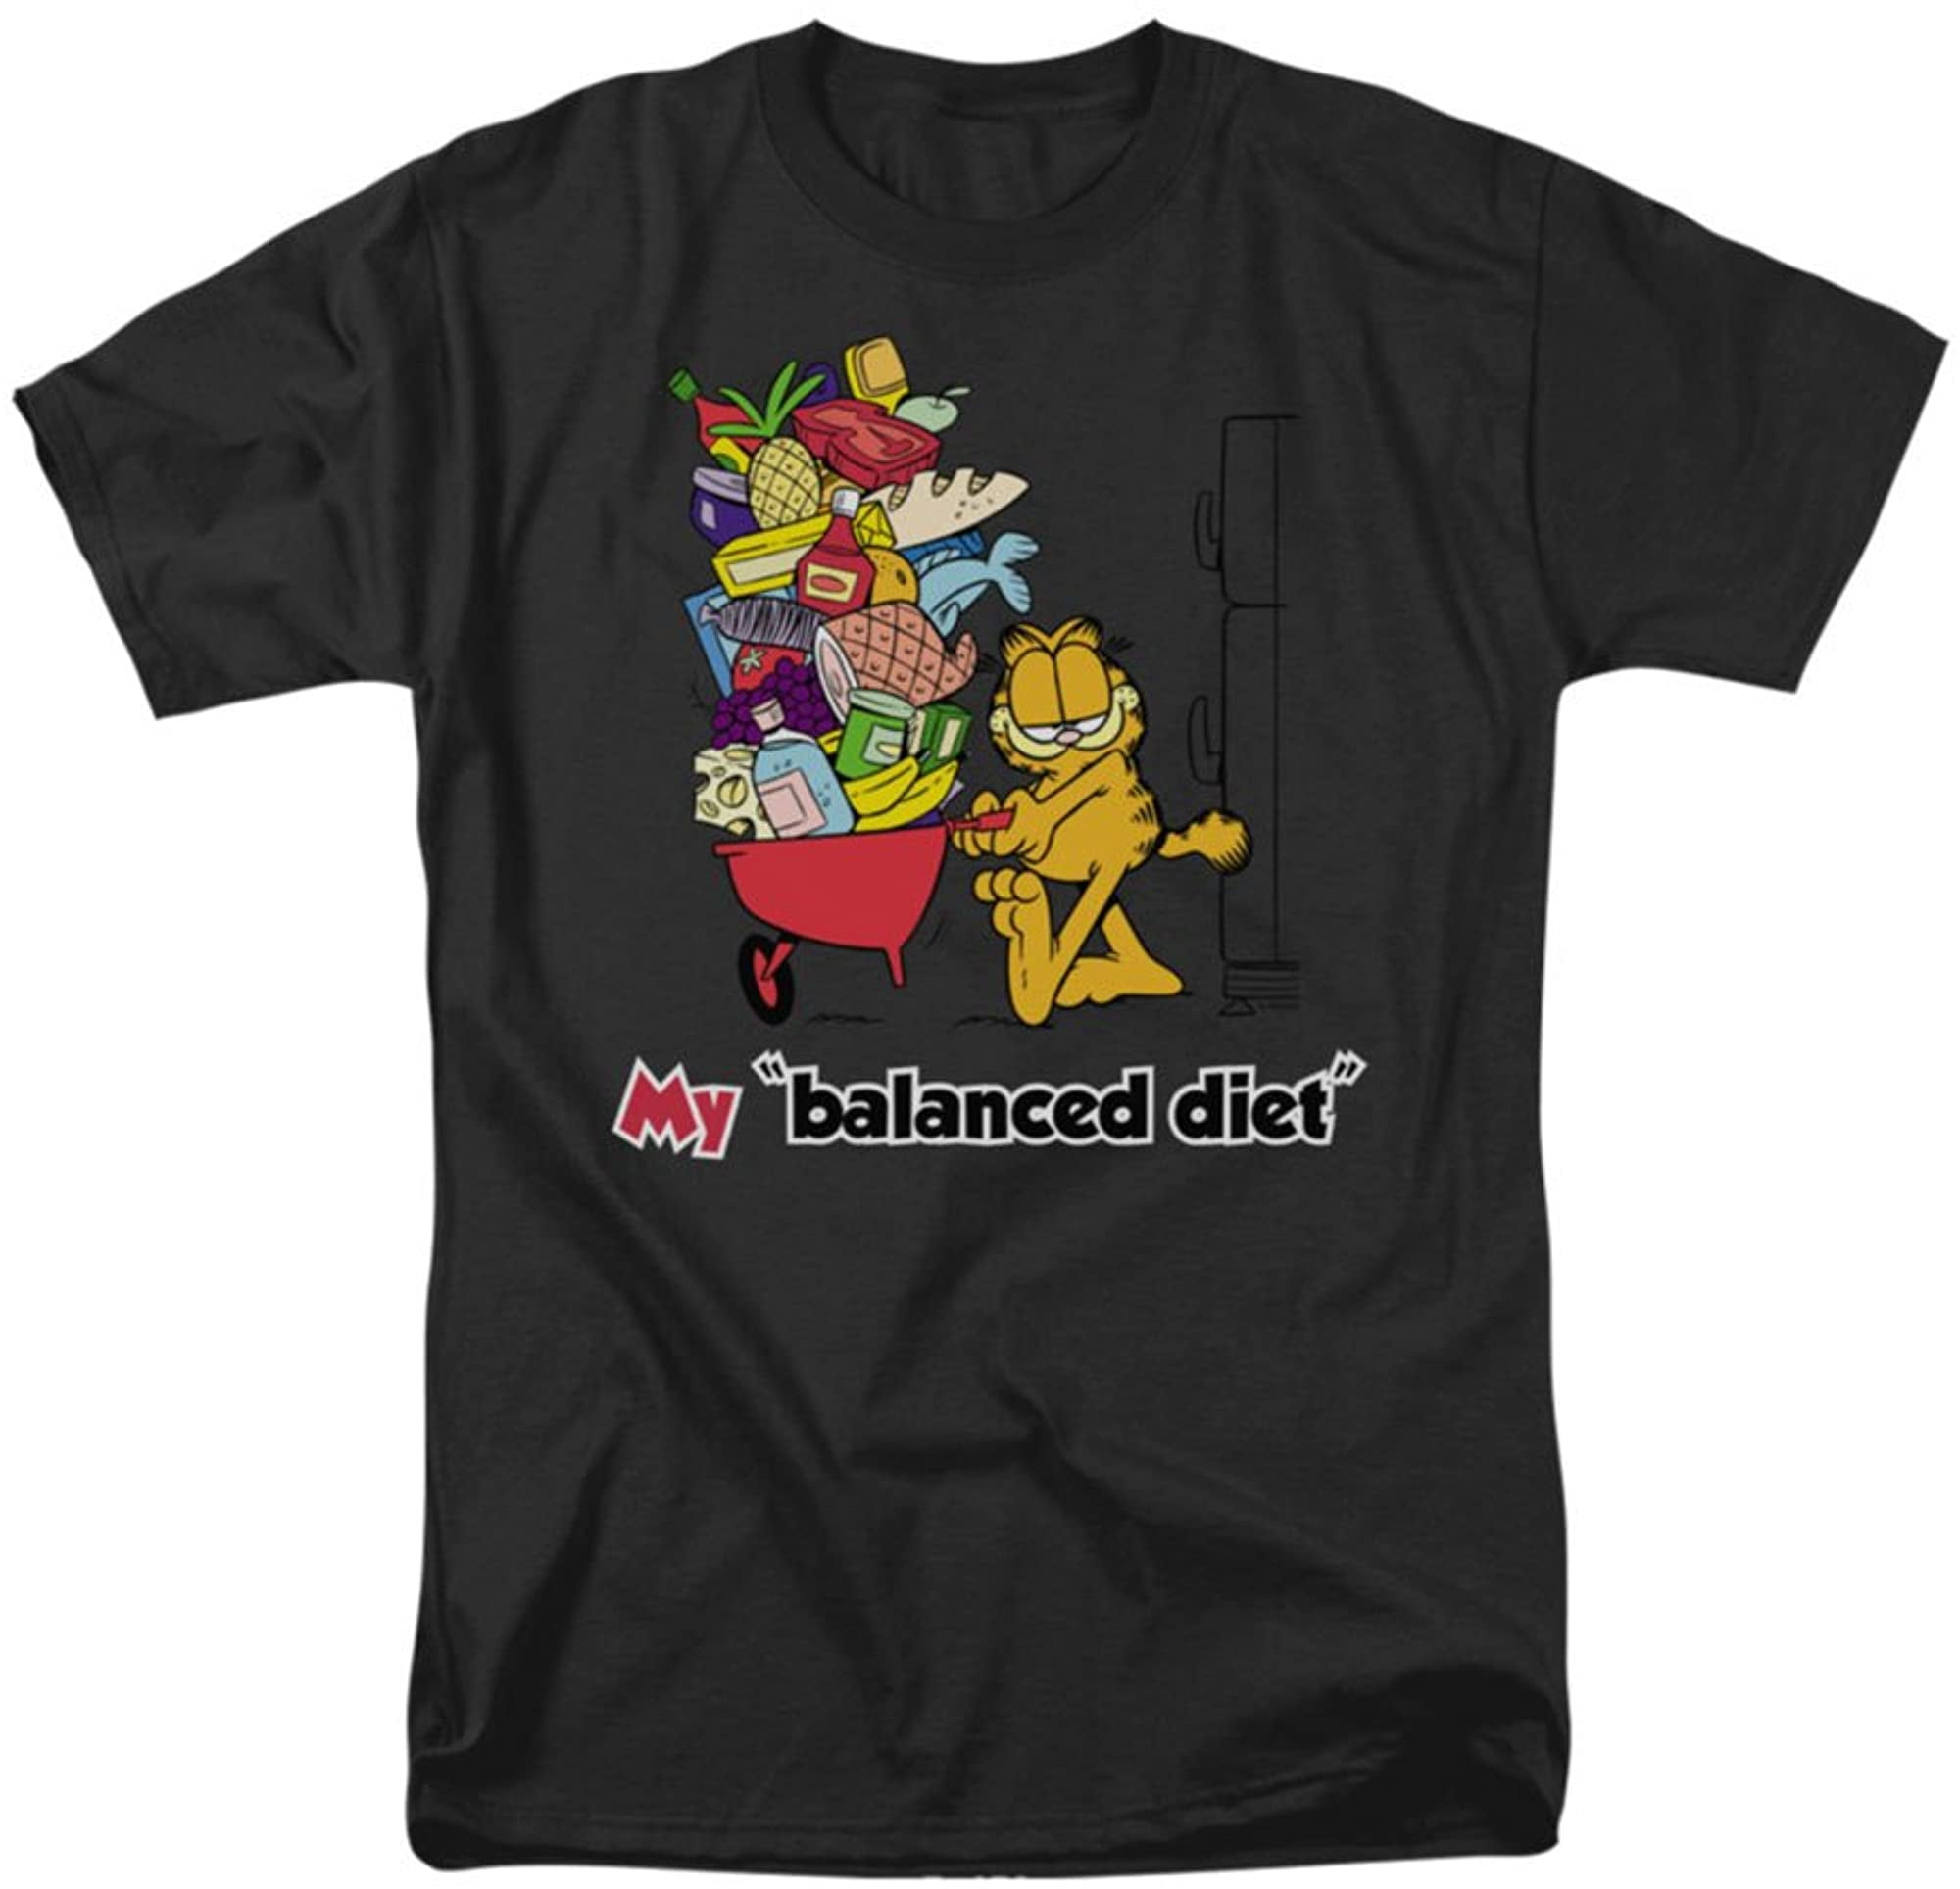 Garfield - Balanced Diet T-Shirt Size XL | Walmart Canada